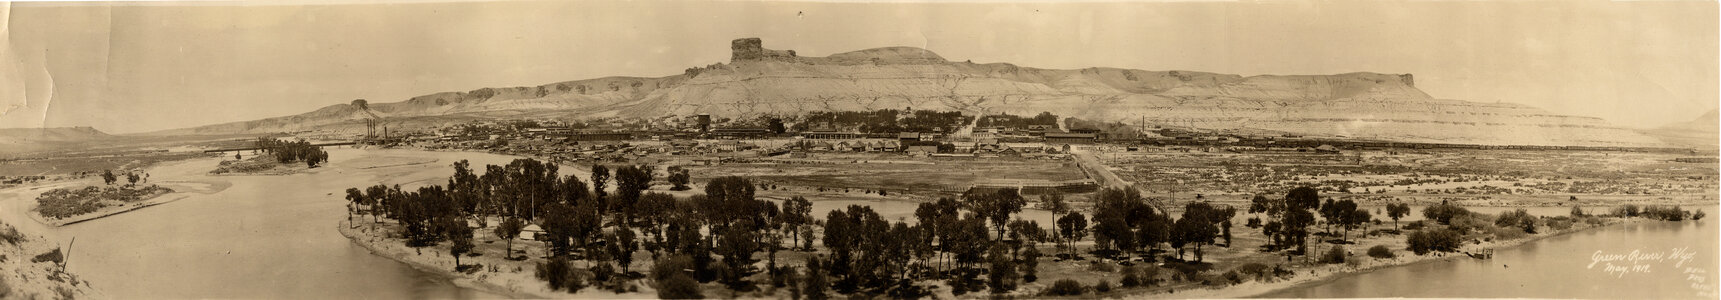 1919 panoramic view of Green River, Wyoming photo